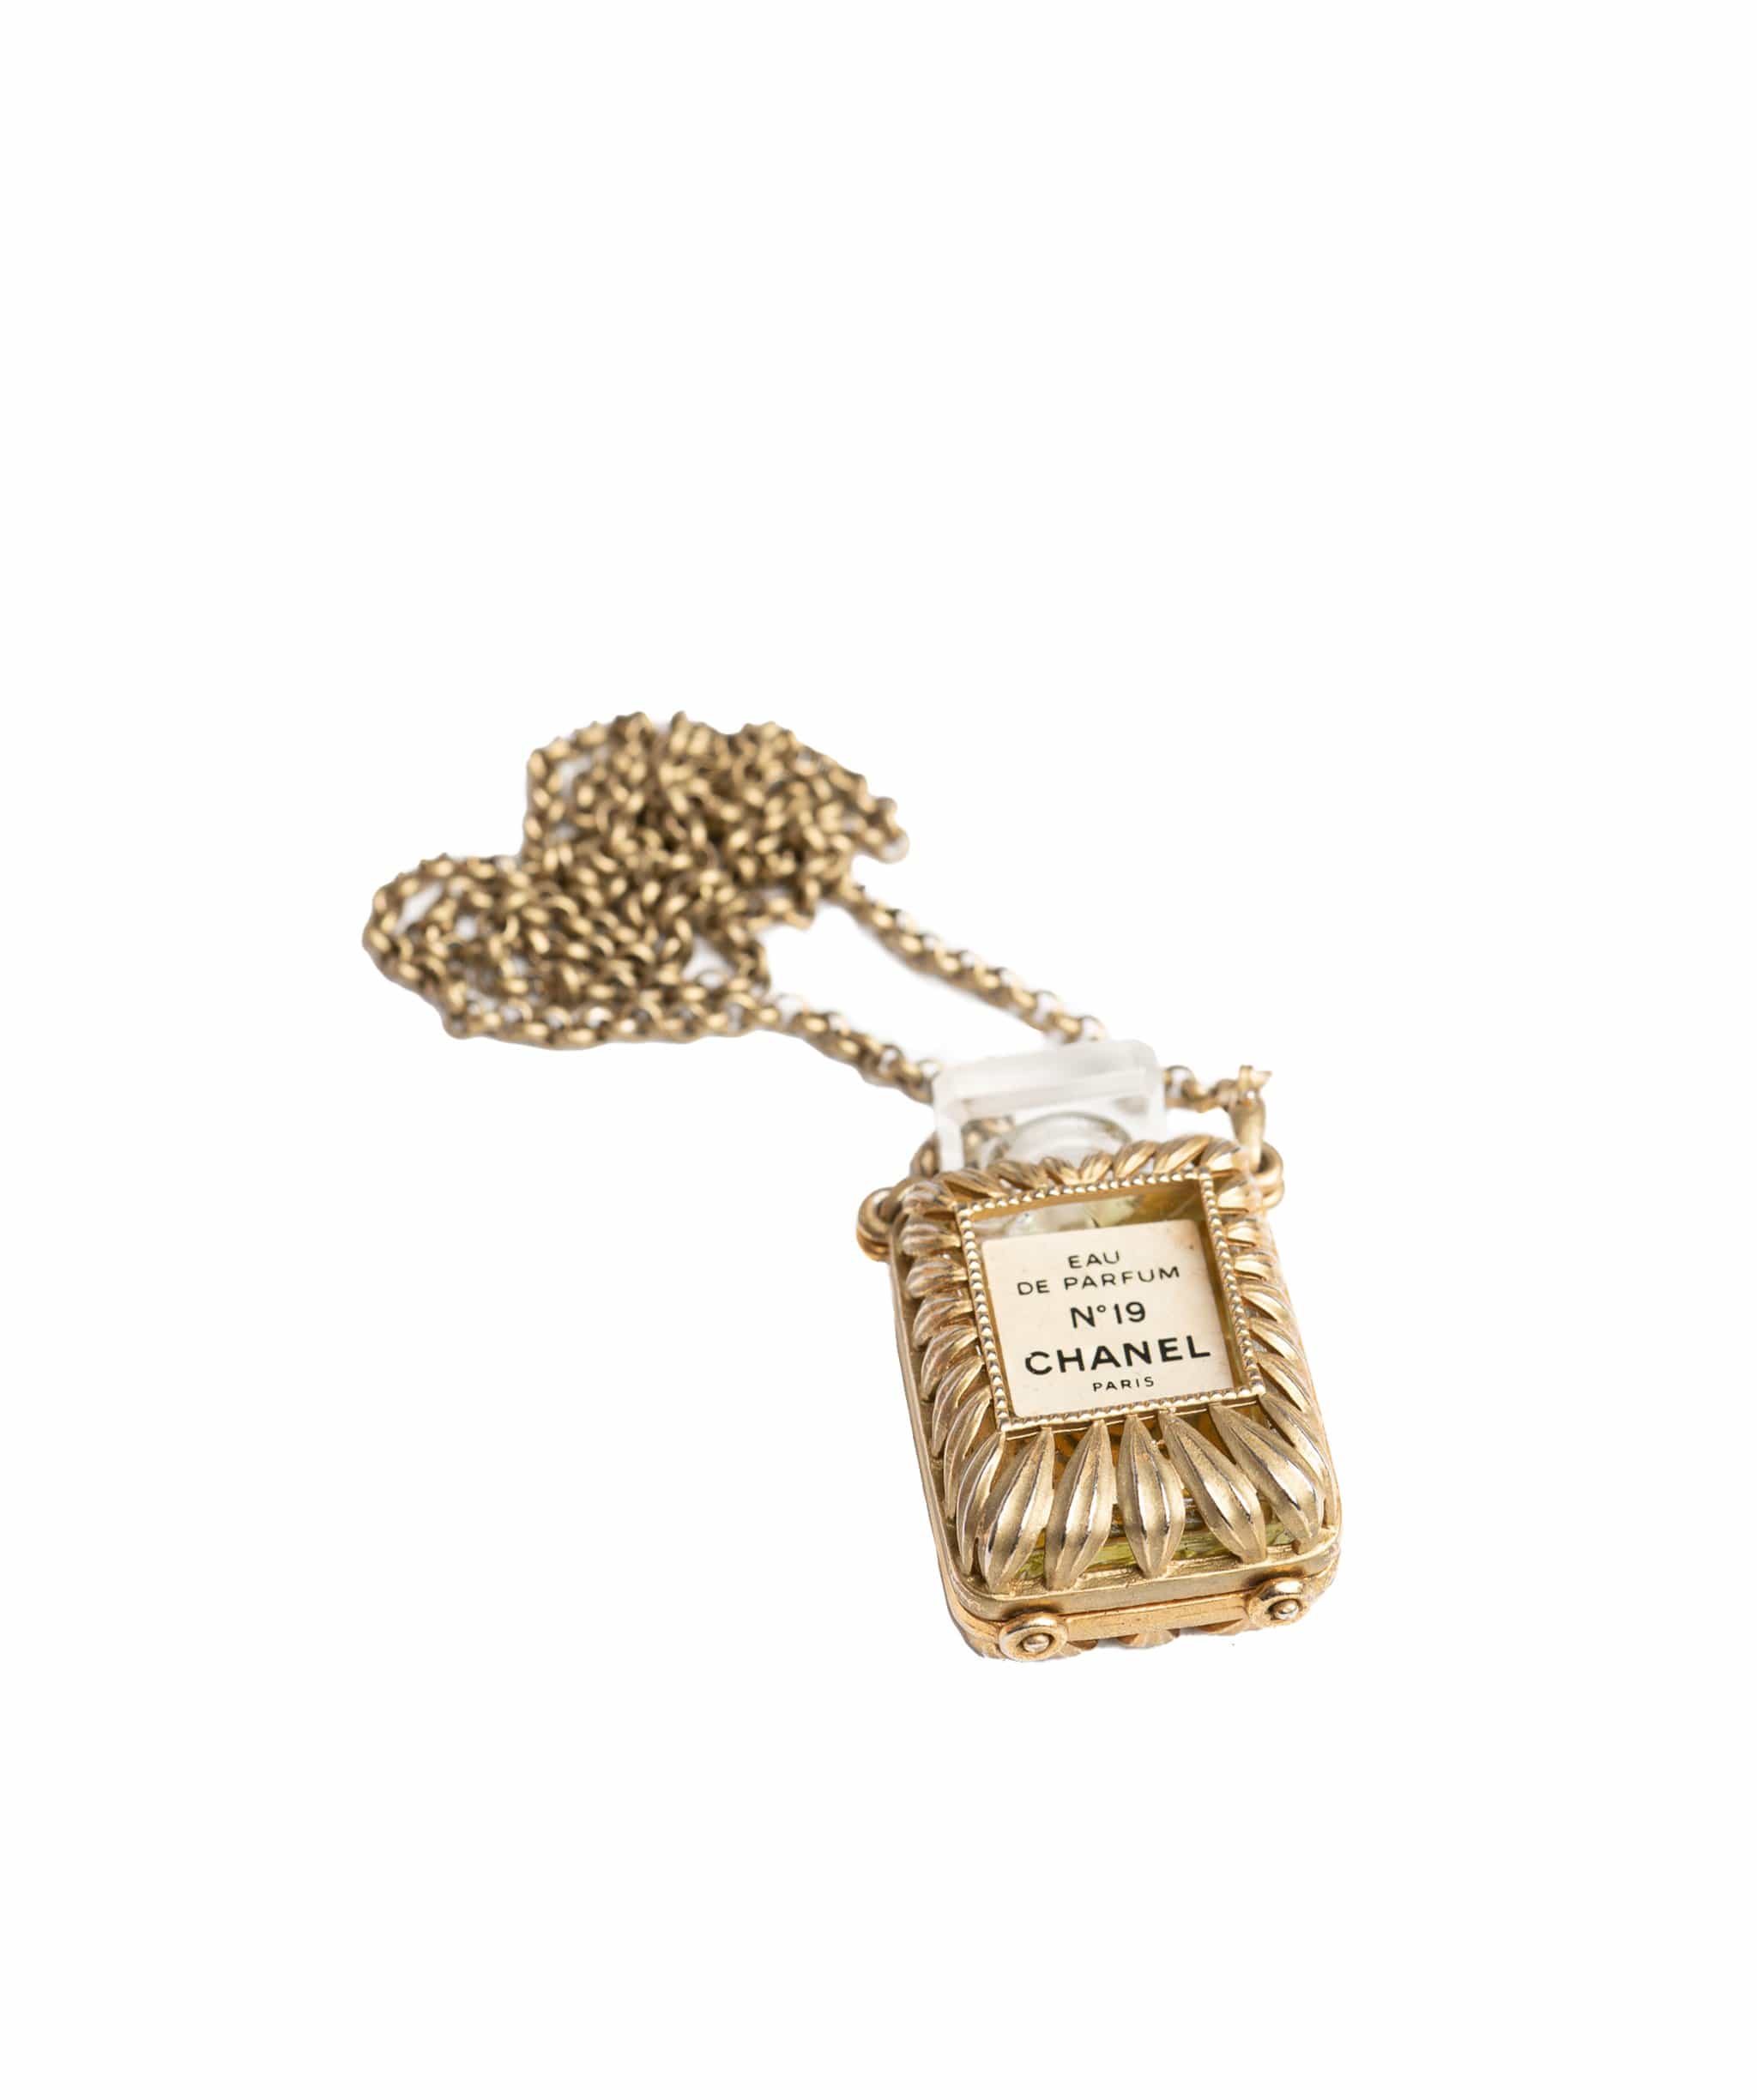 Chanel style perfume bottle necklace gold ASL1103 – LuxuryPromise